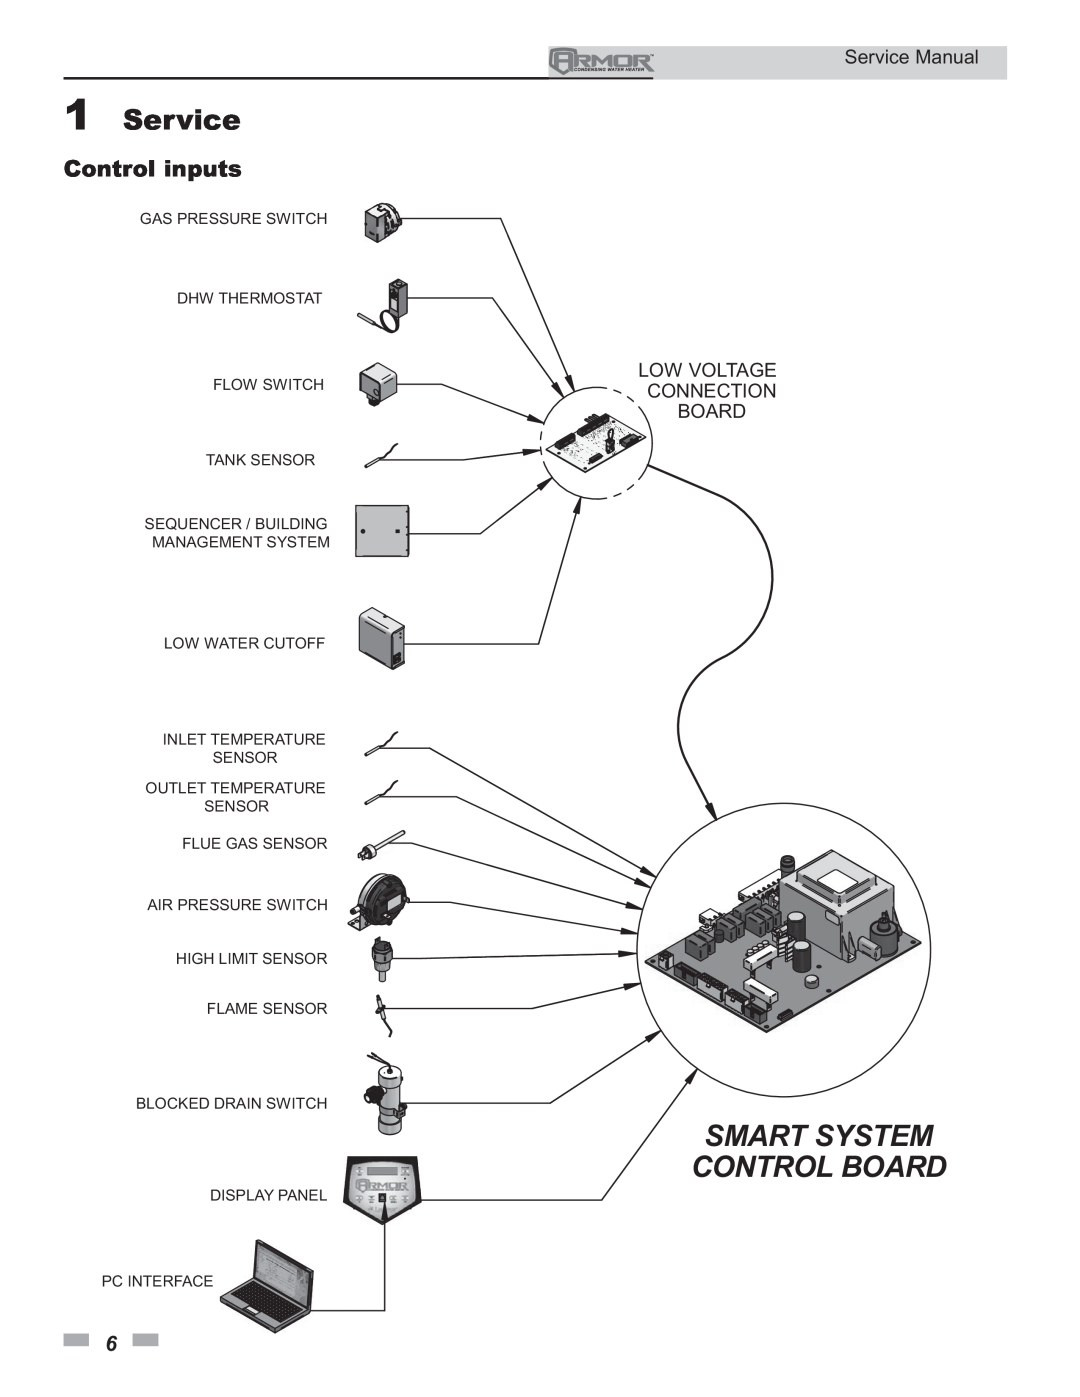 Lochinvar 150 - 500 service manual Smart System Control Board, Control inputs, 1Service 